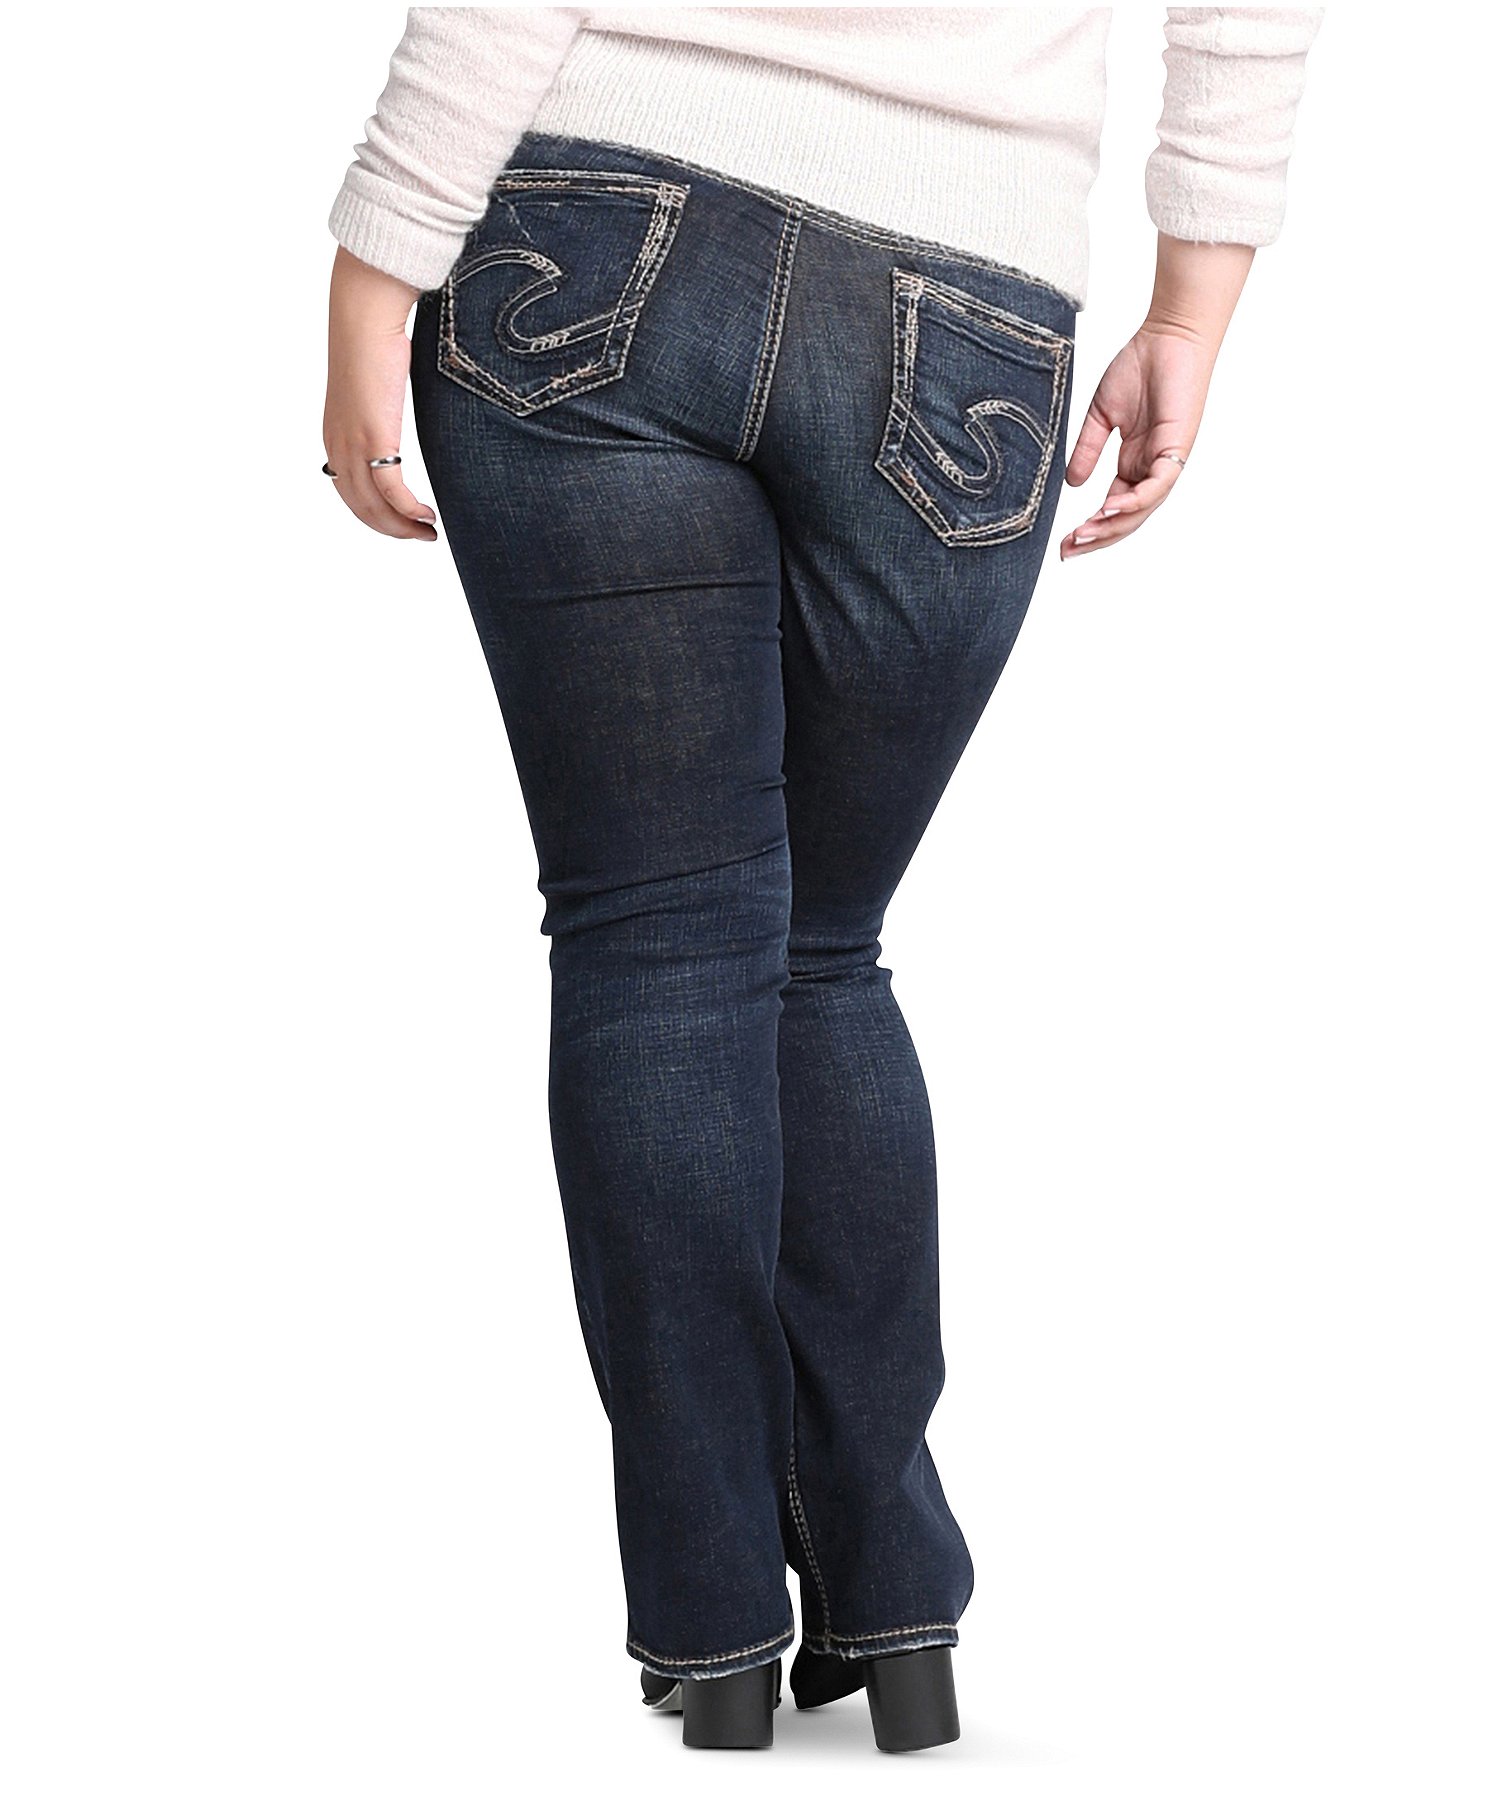 Silver Jeans Co Womens Plus Size Elyse Slim Boot Cut